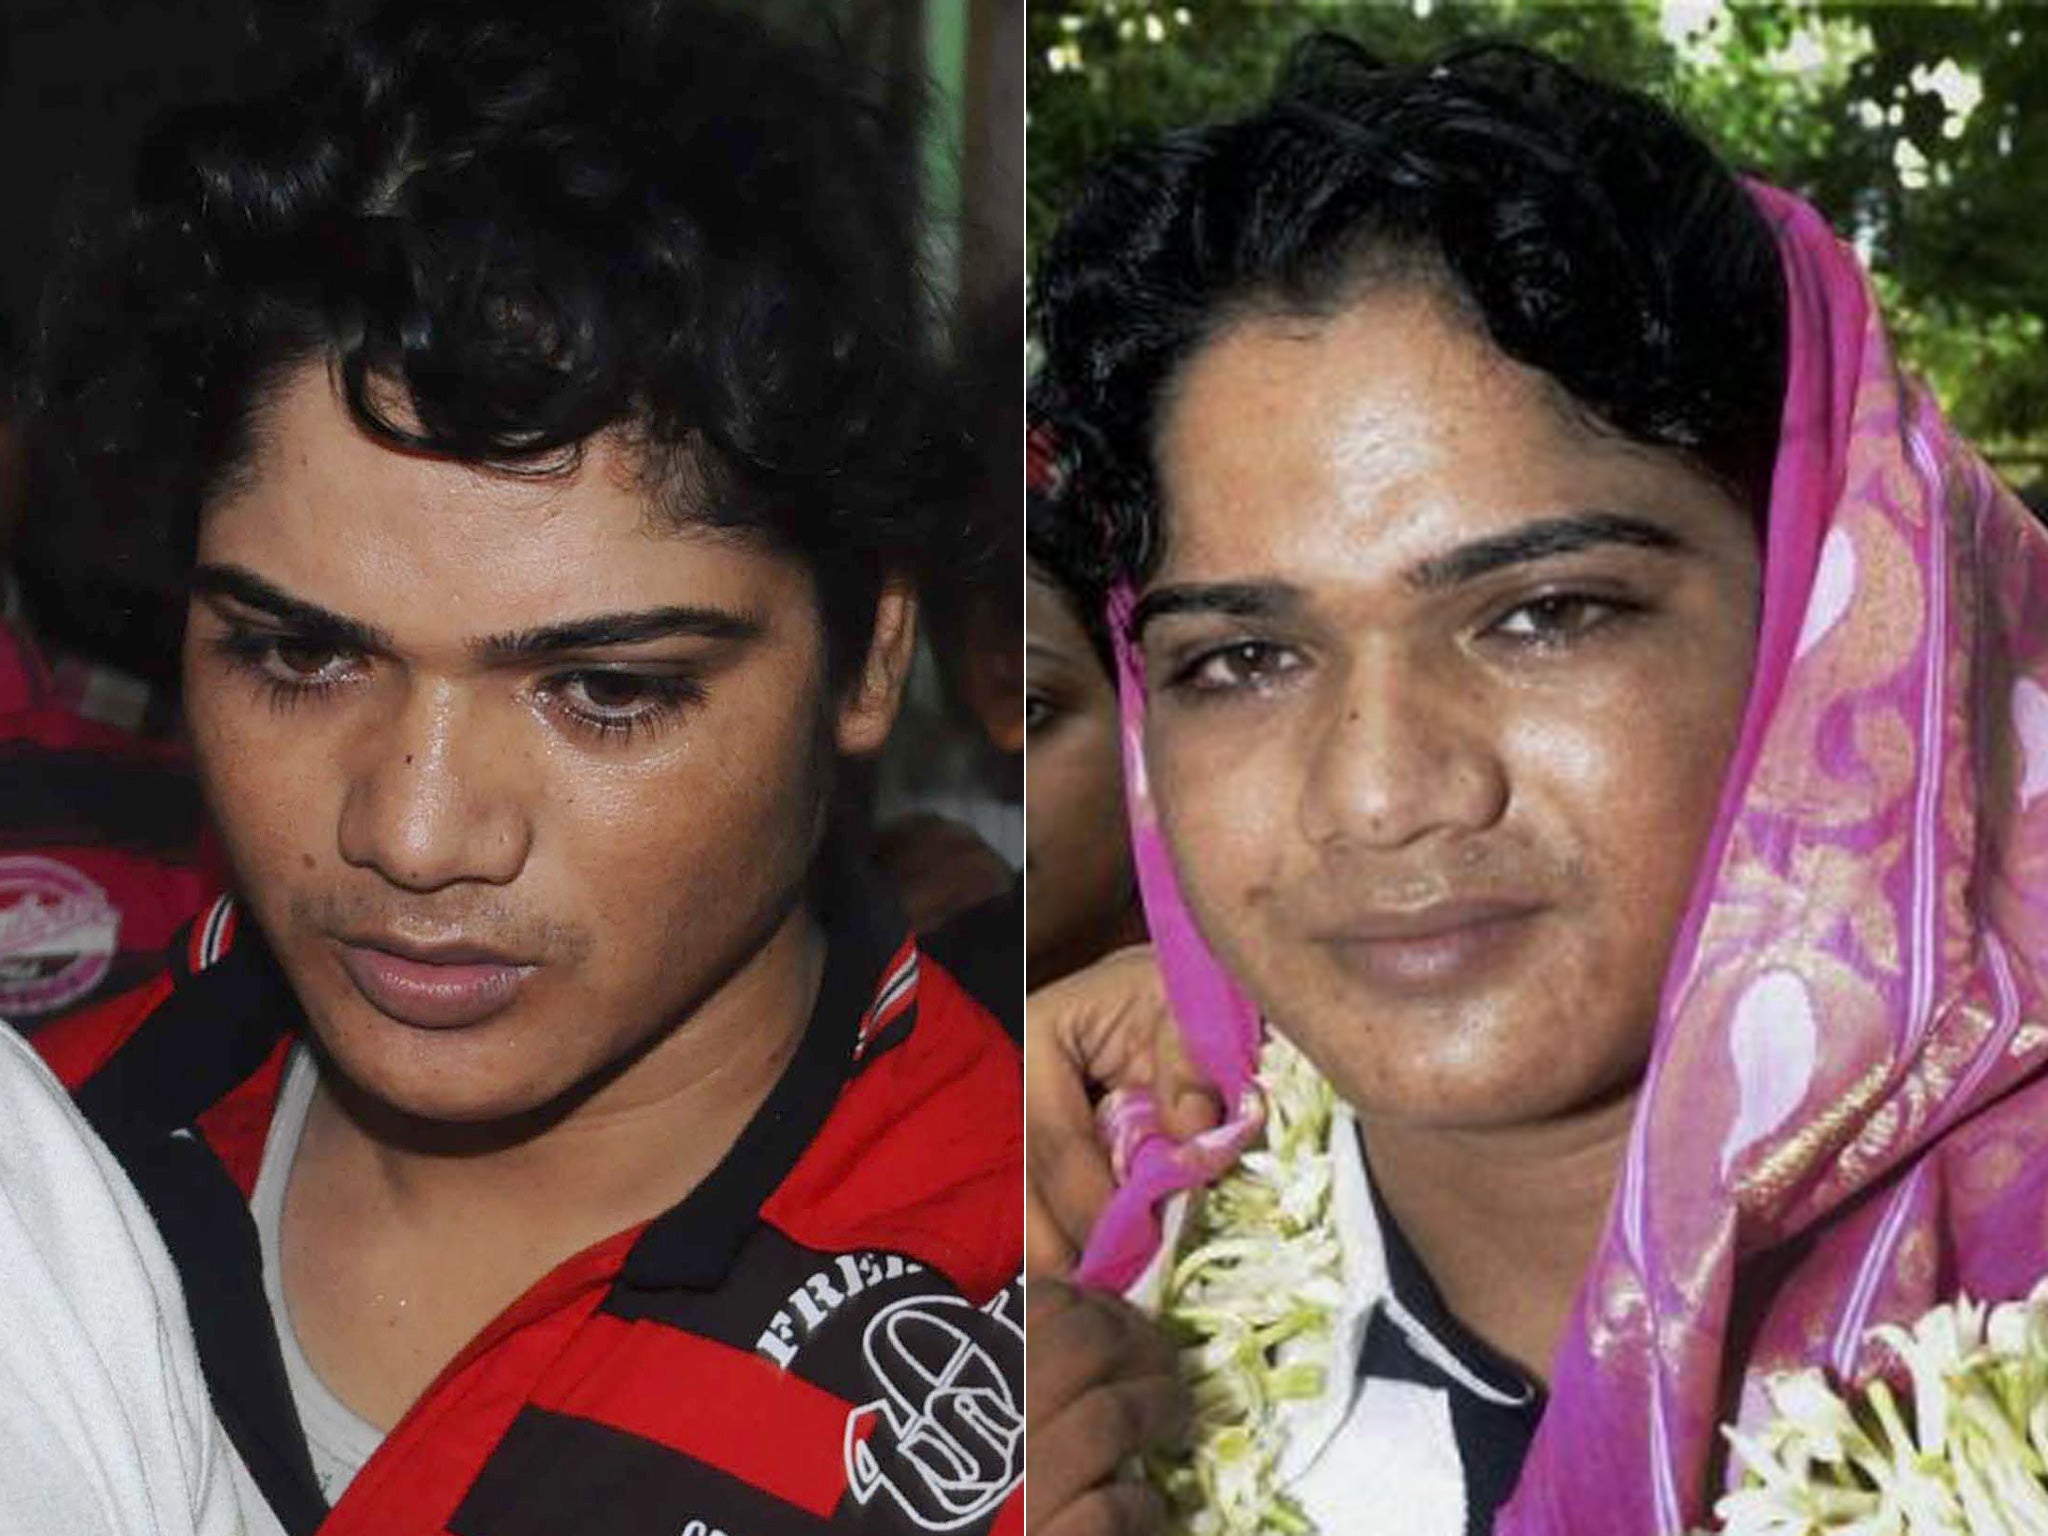 Athlete Pinki Pramanik who has been accused of rape